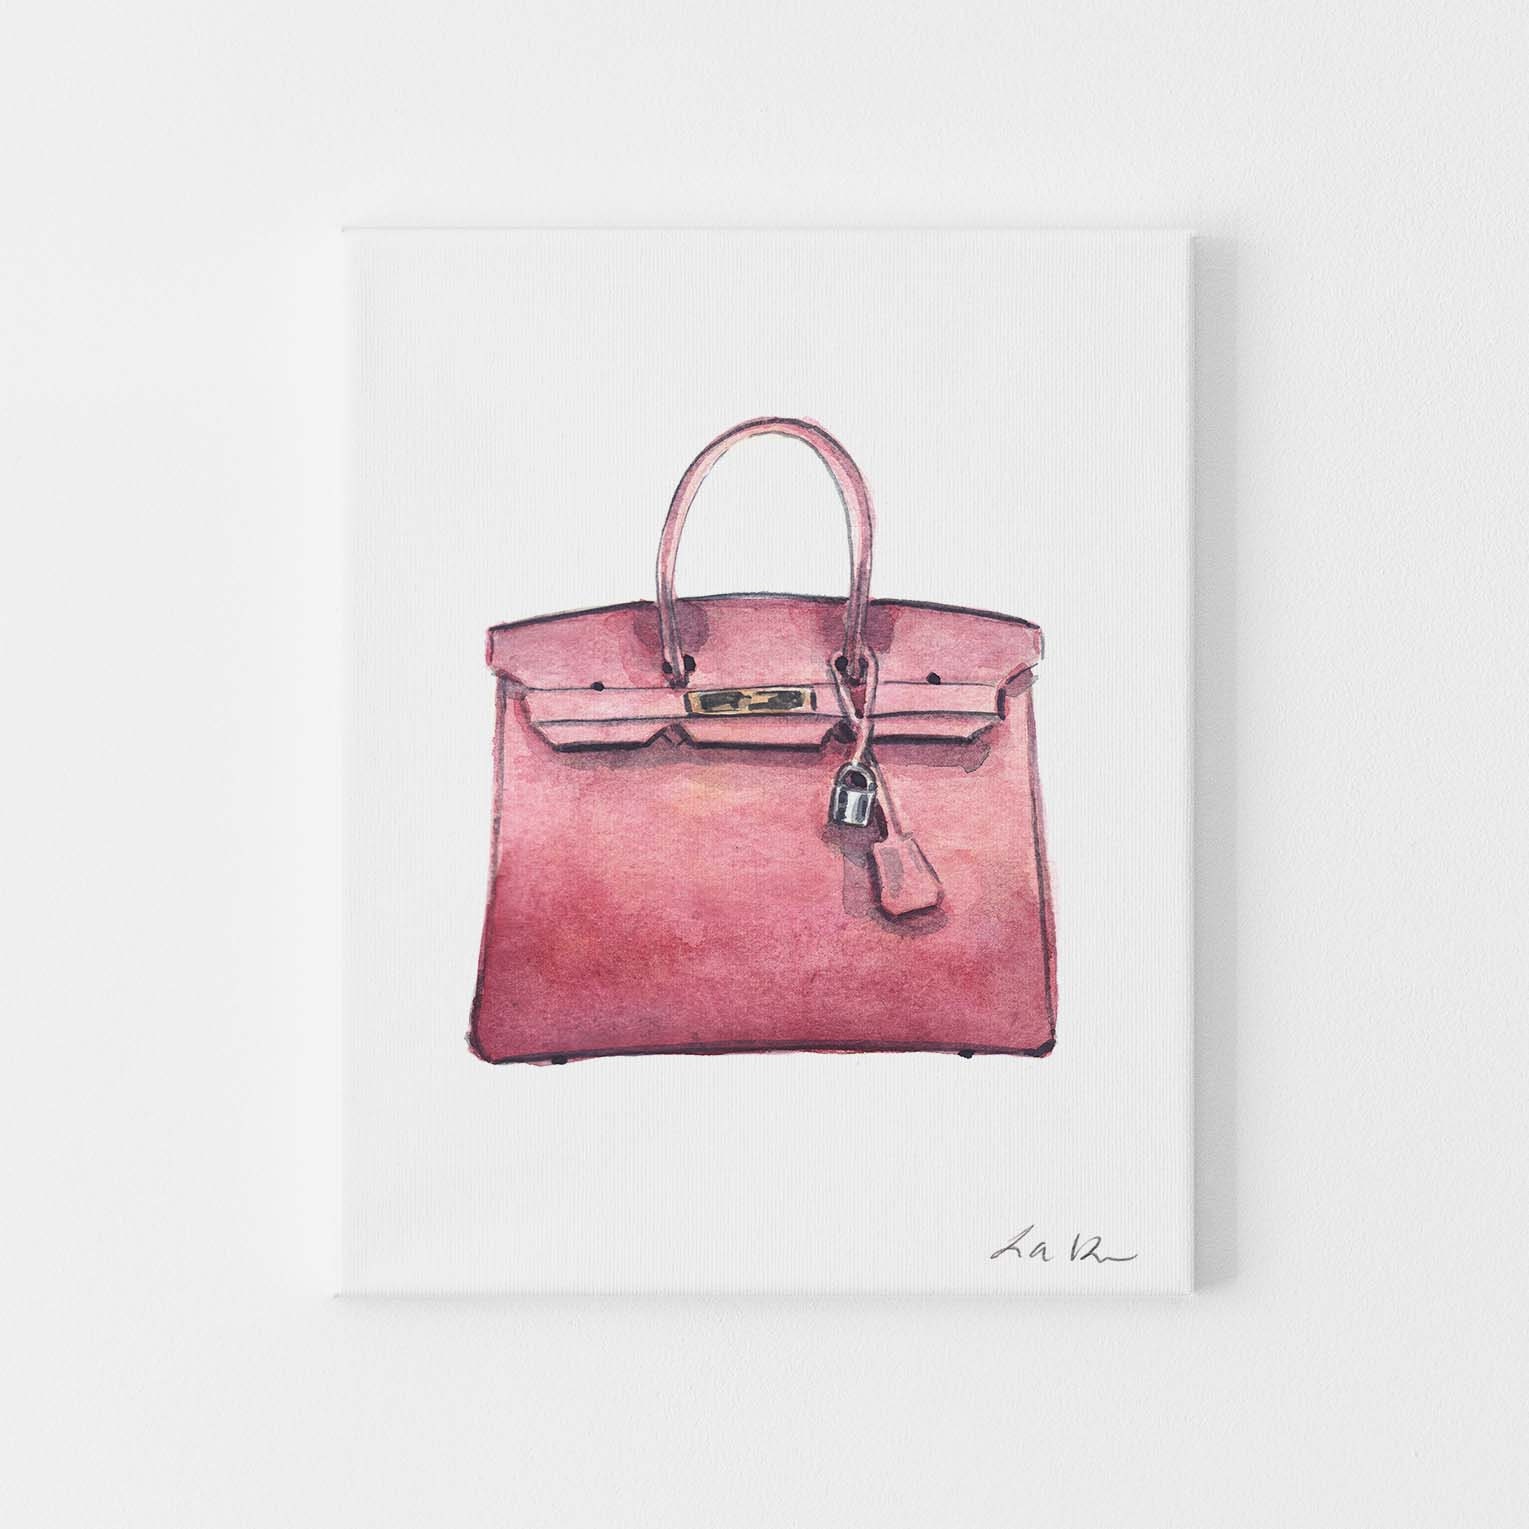 ART PRINT Birkin Bag Watercolor Painting Wall Decor Fashion | Etsy